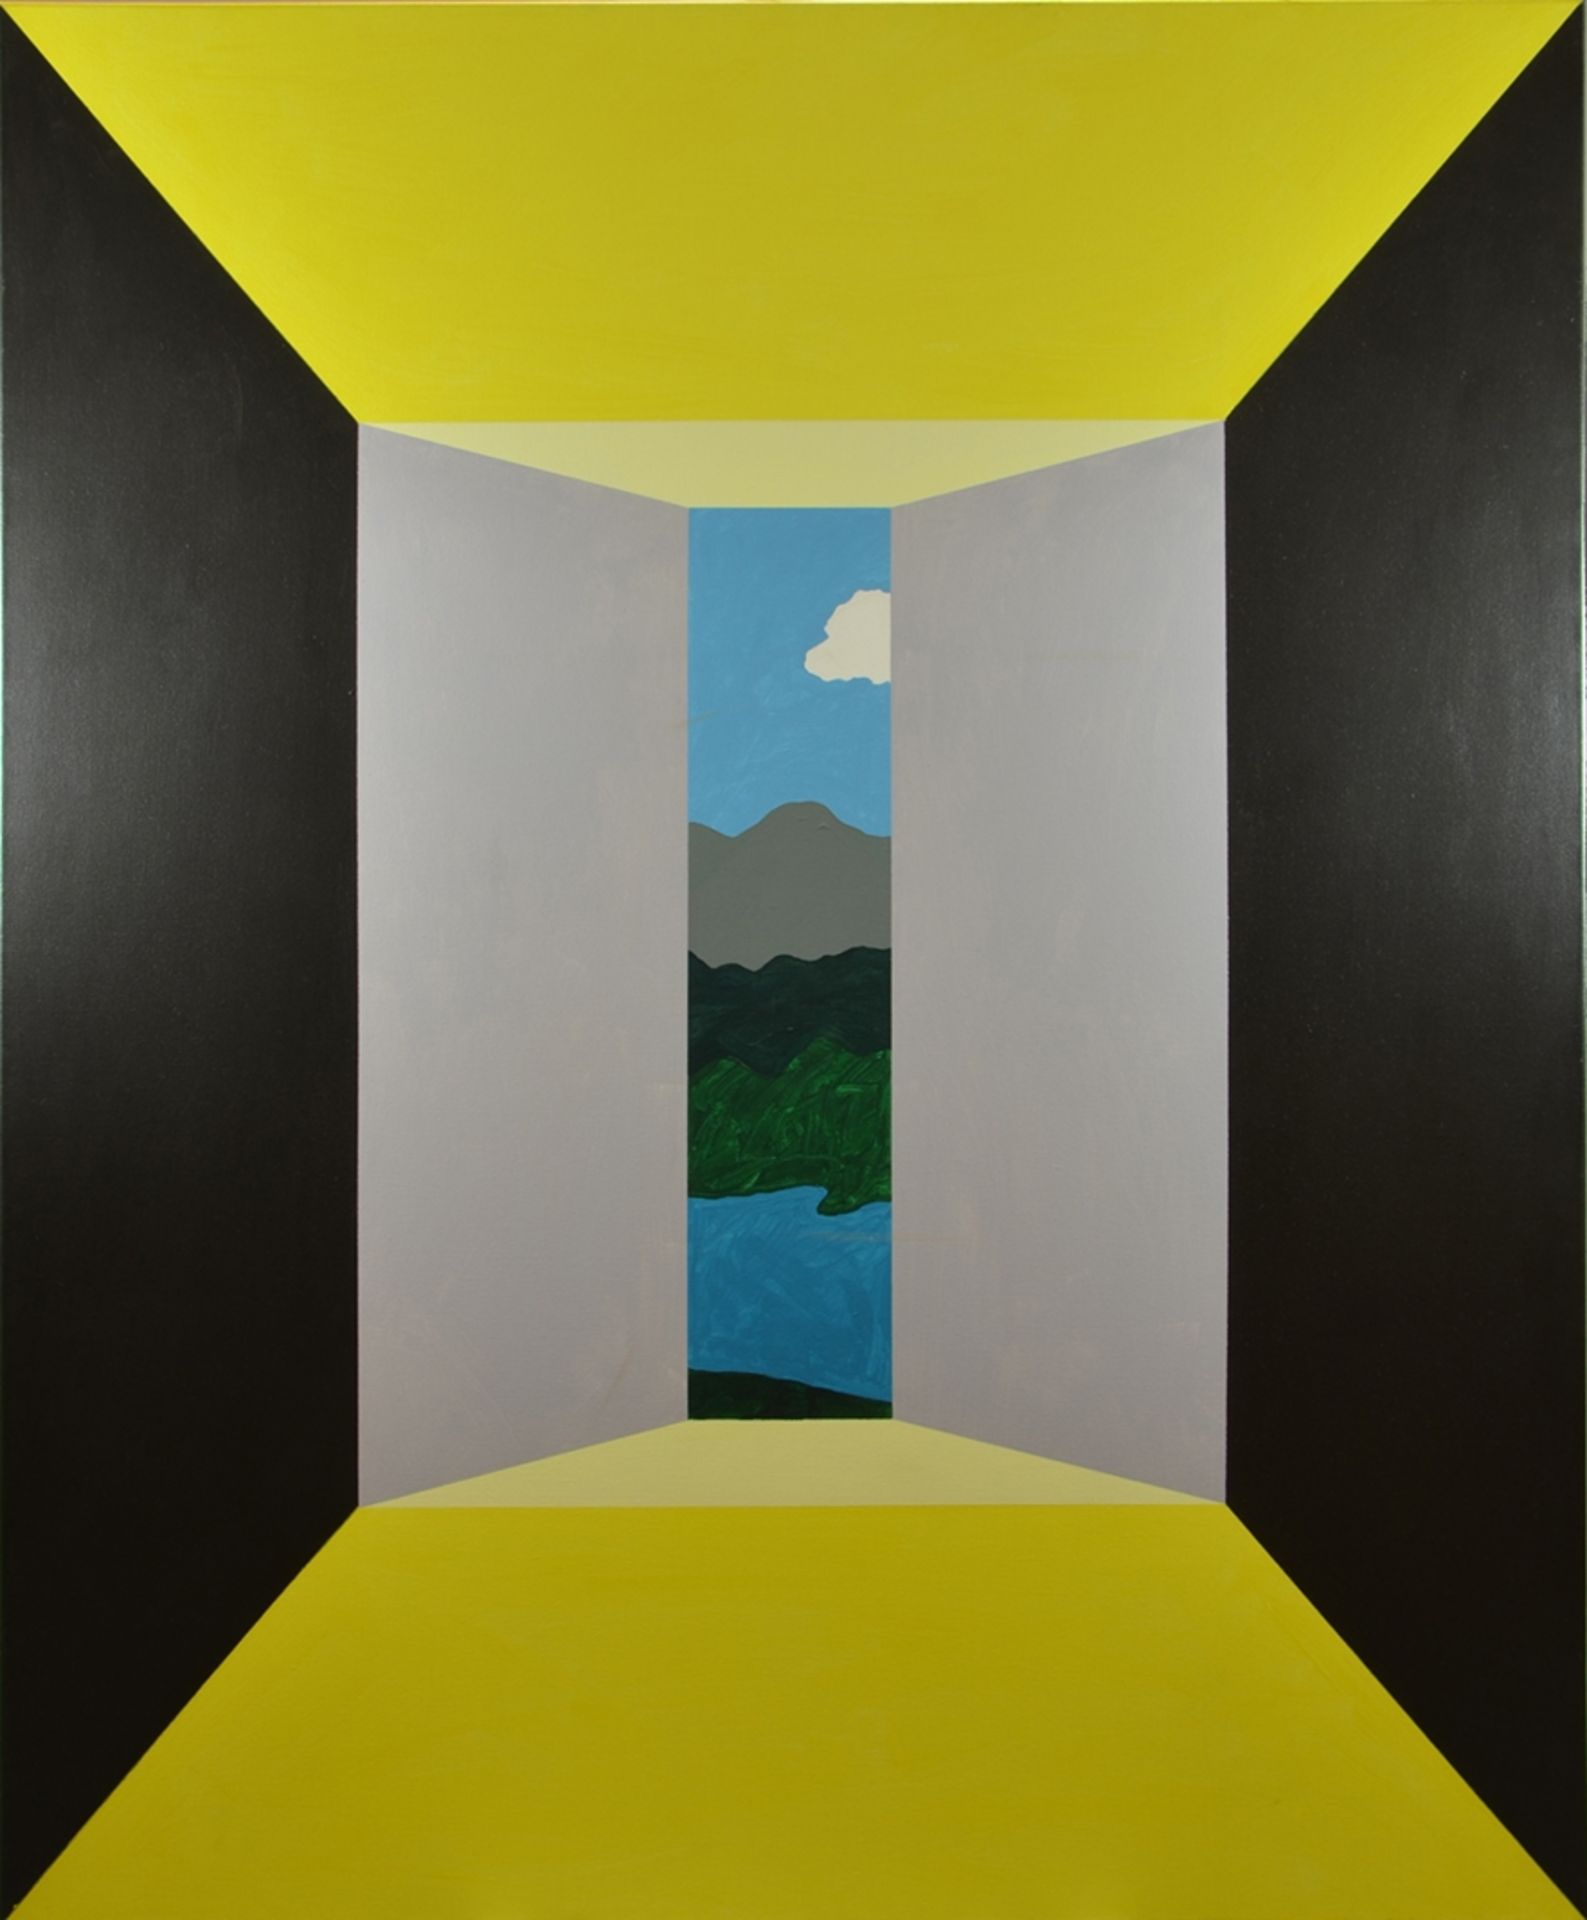 Romijn, Gust (1922-2010) "Landzee - Zeeland", acrylic/canvas, 1996, 170x120cm, canvas dented in two